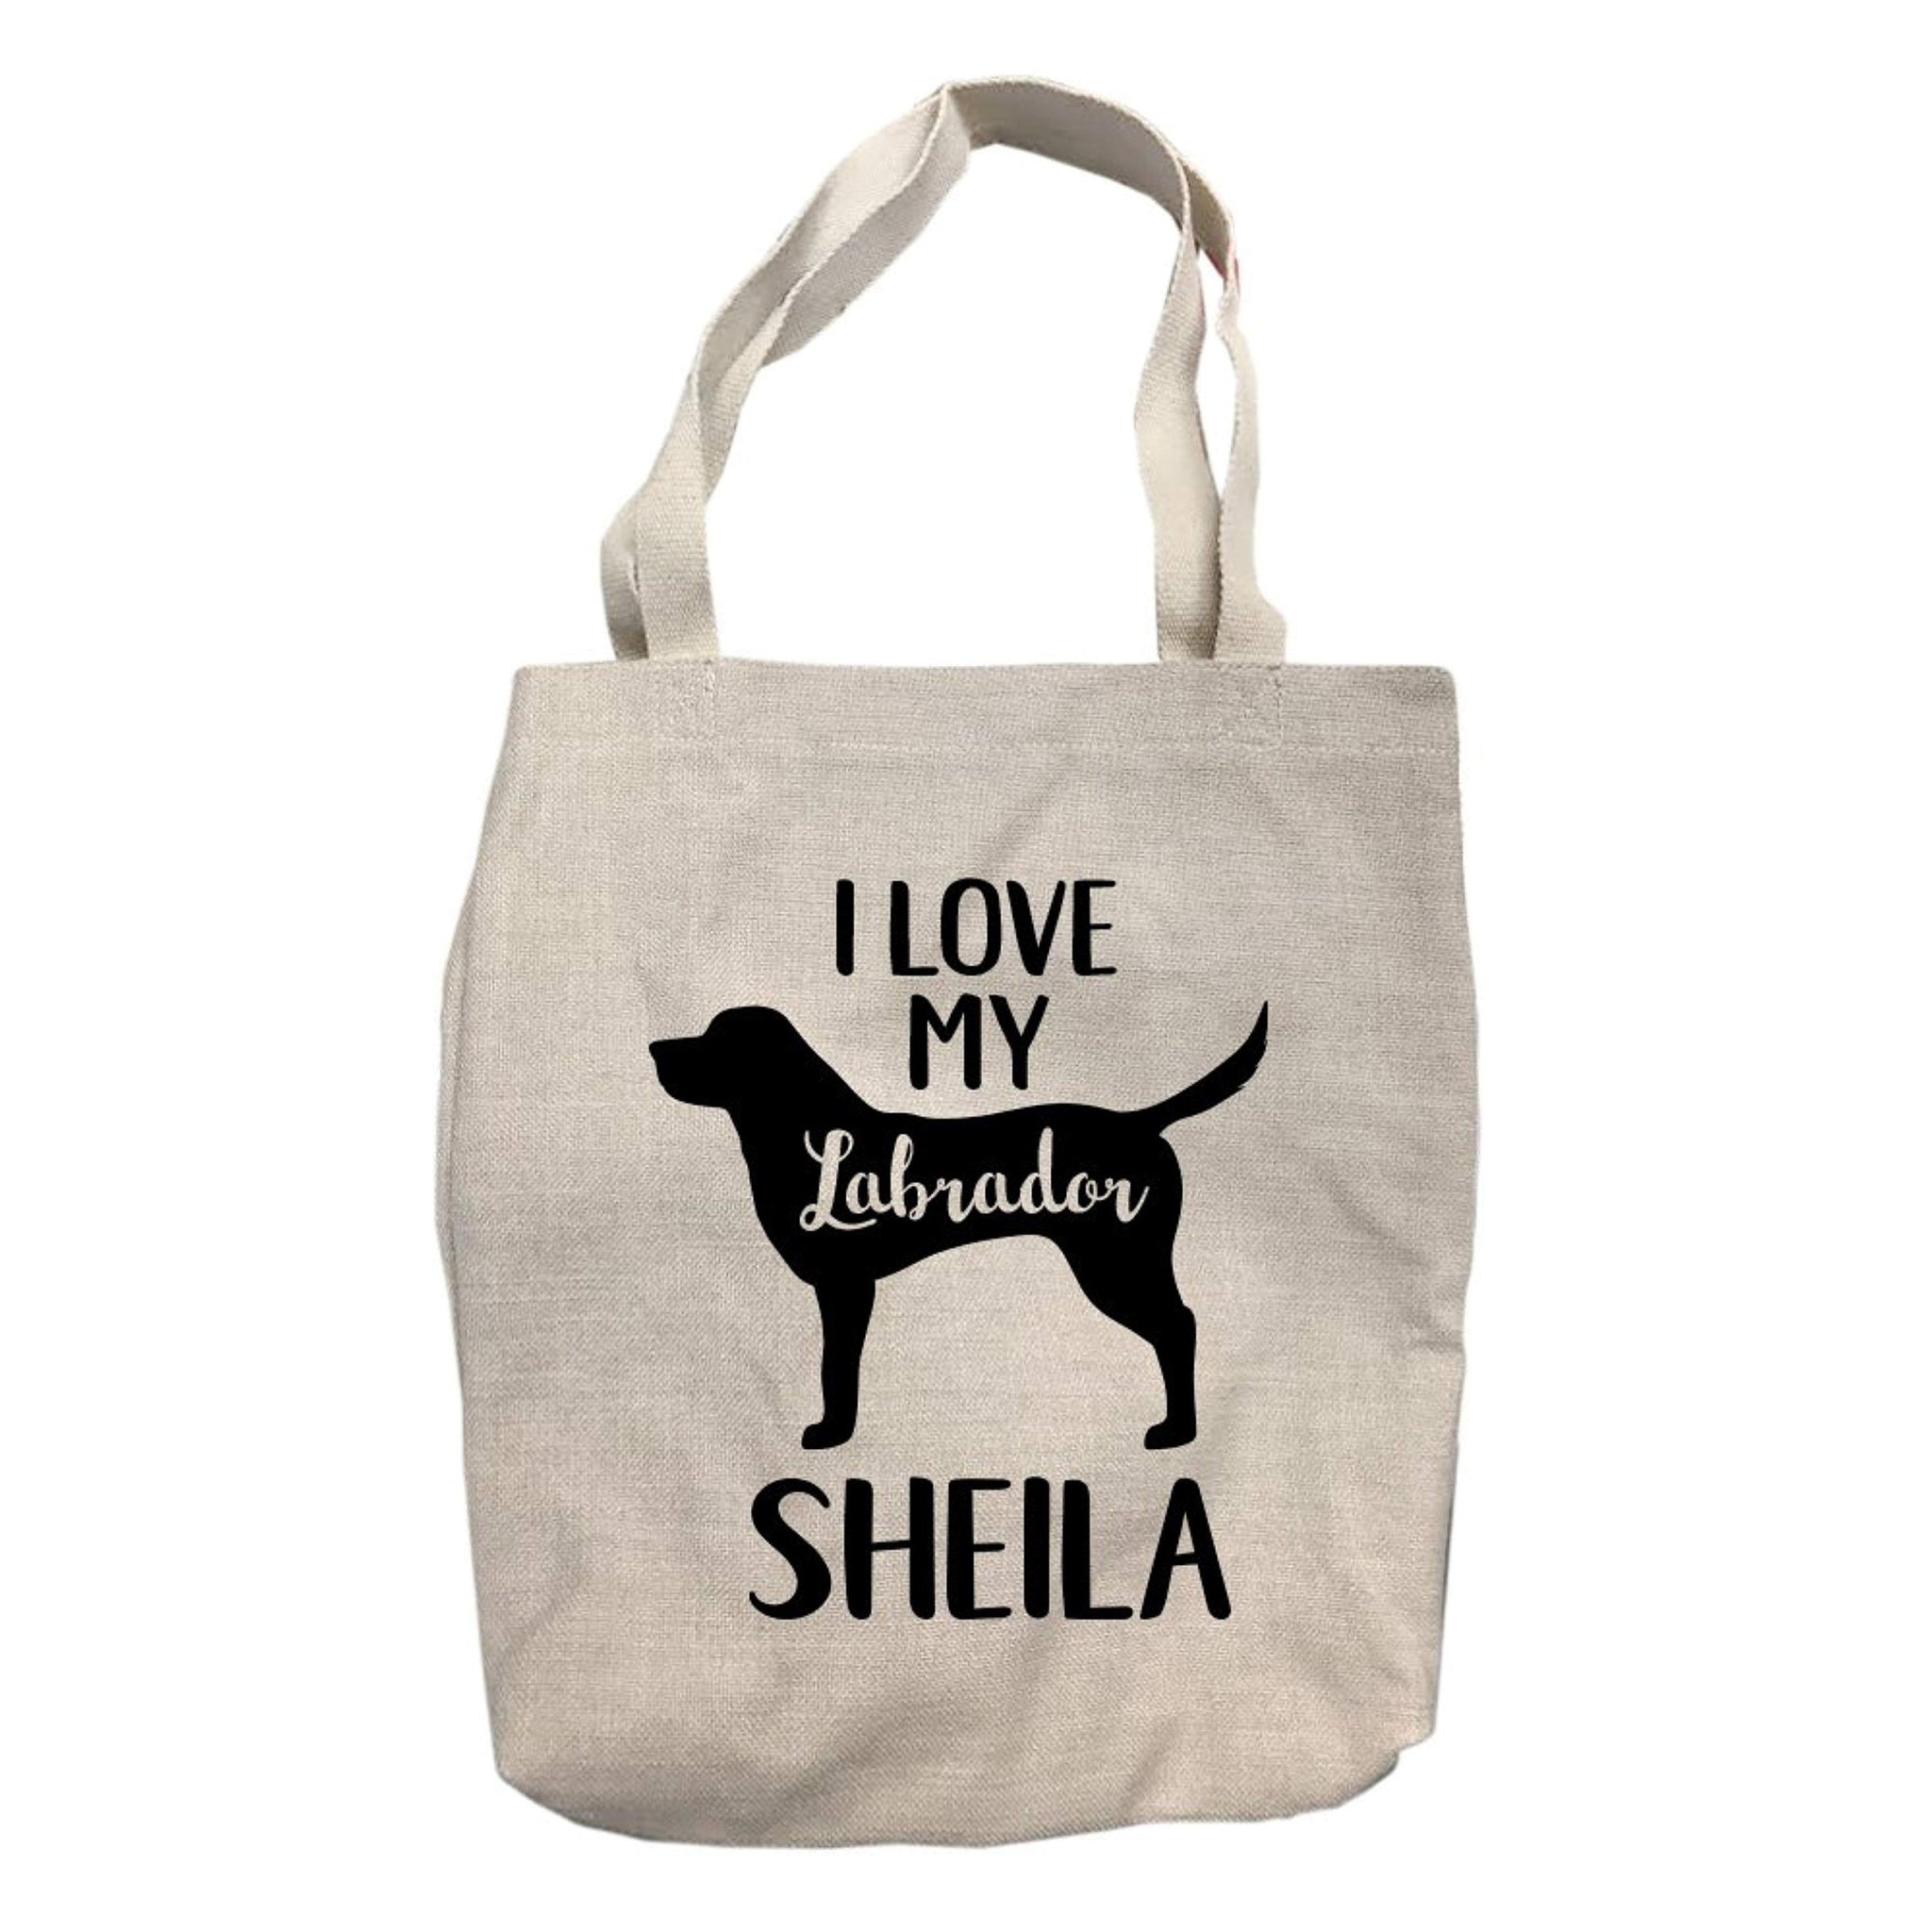 Personalized I Love My Labrador Tote Bag